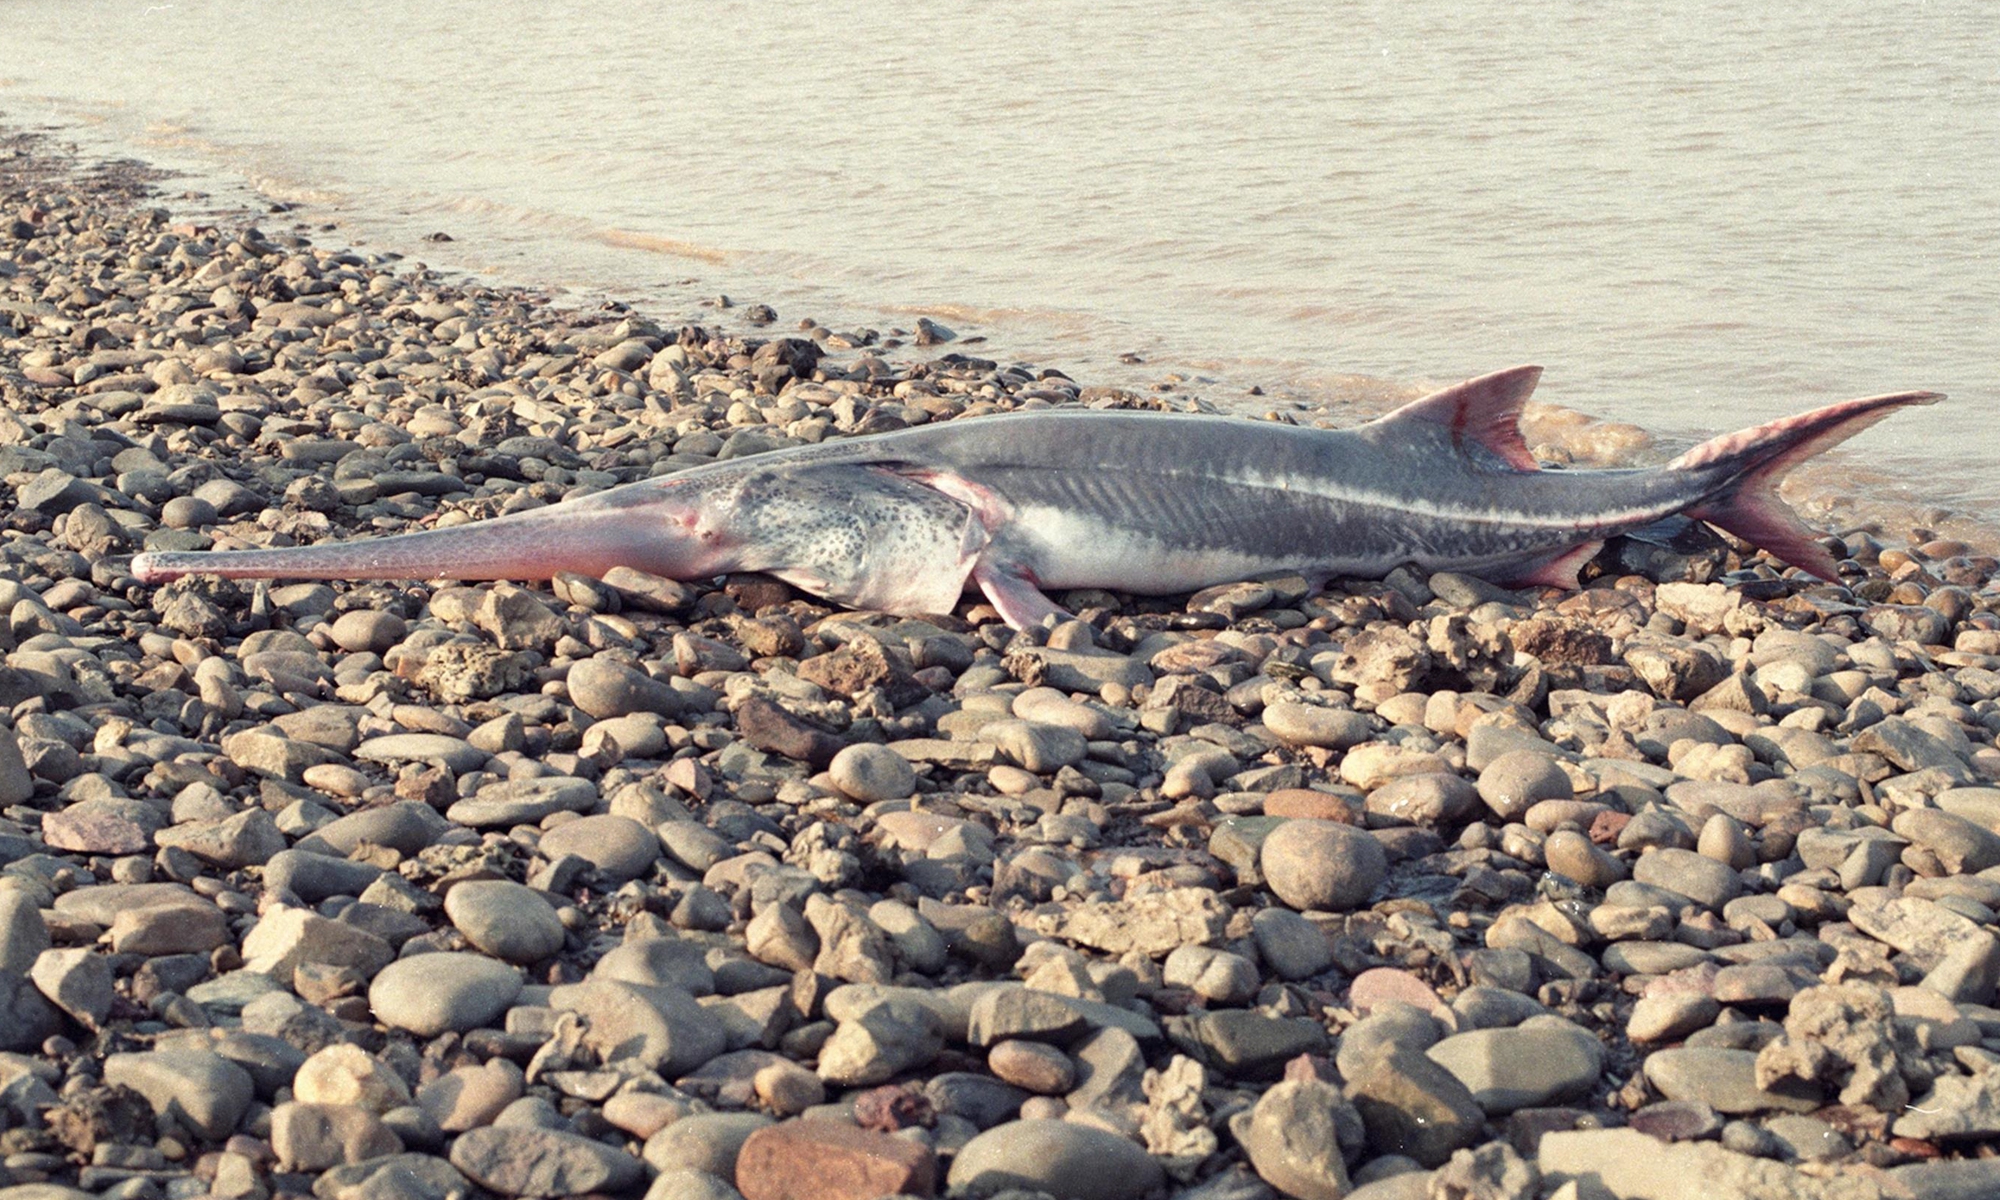 Extinction of Chinese paddlefish raises awareness on biodiversity protection in China’s largest river